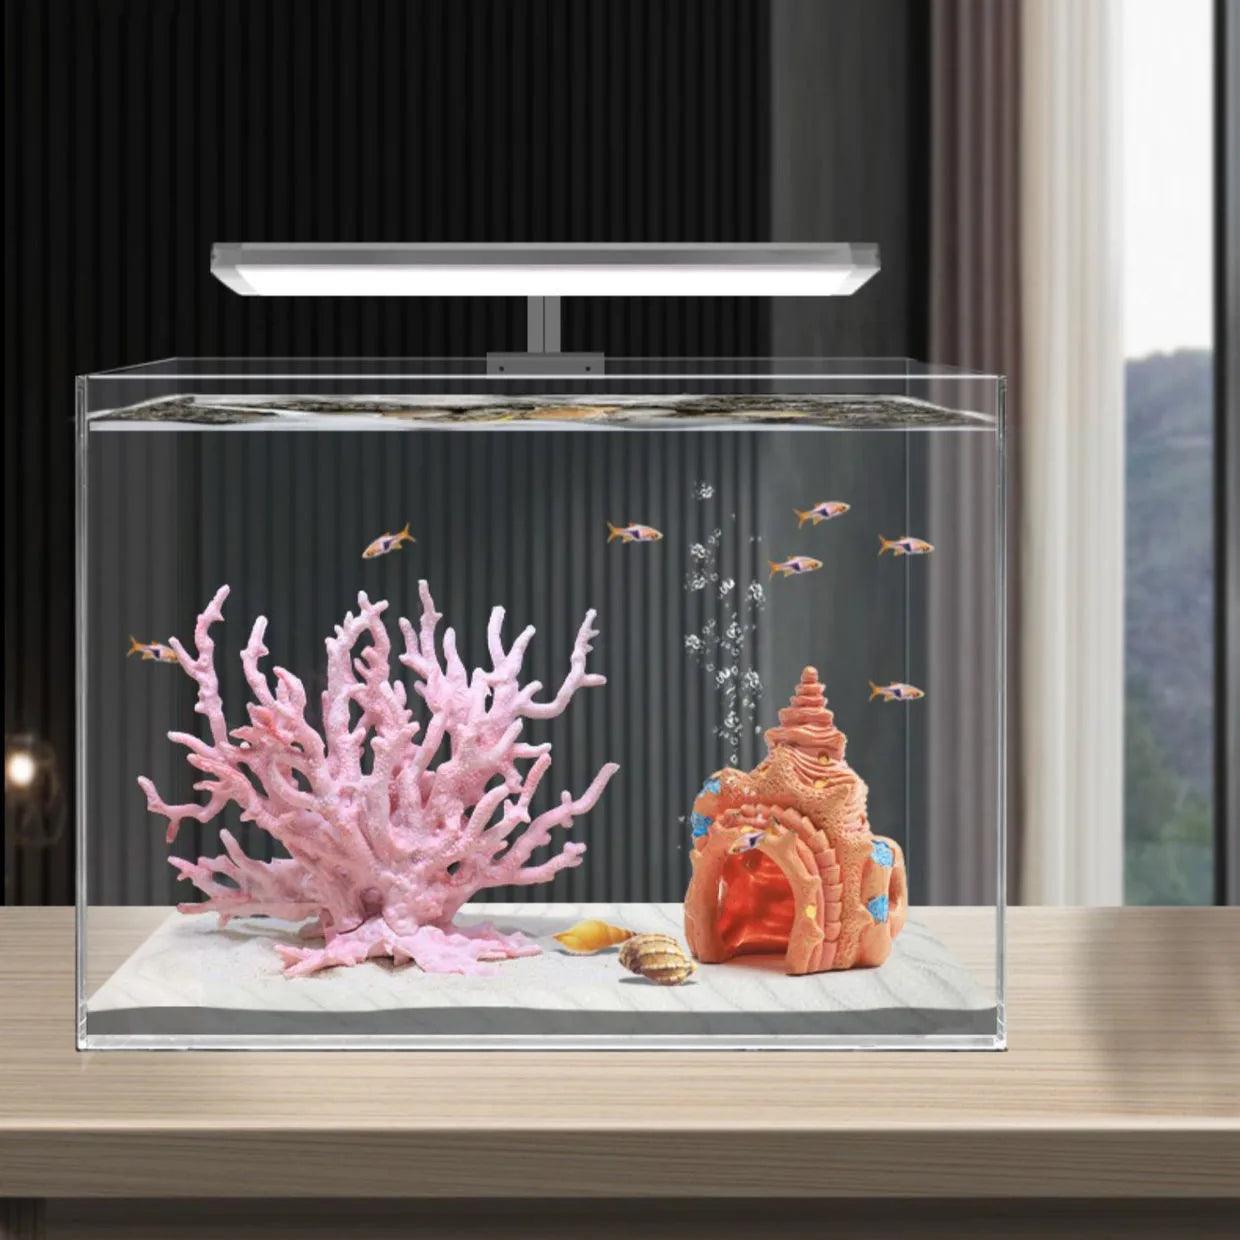 Simulation Coral Resin Aquarium Decor Marine Ornaments - MR. GIFT